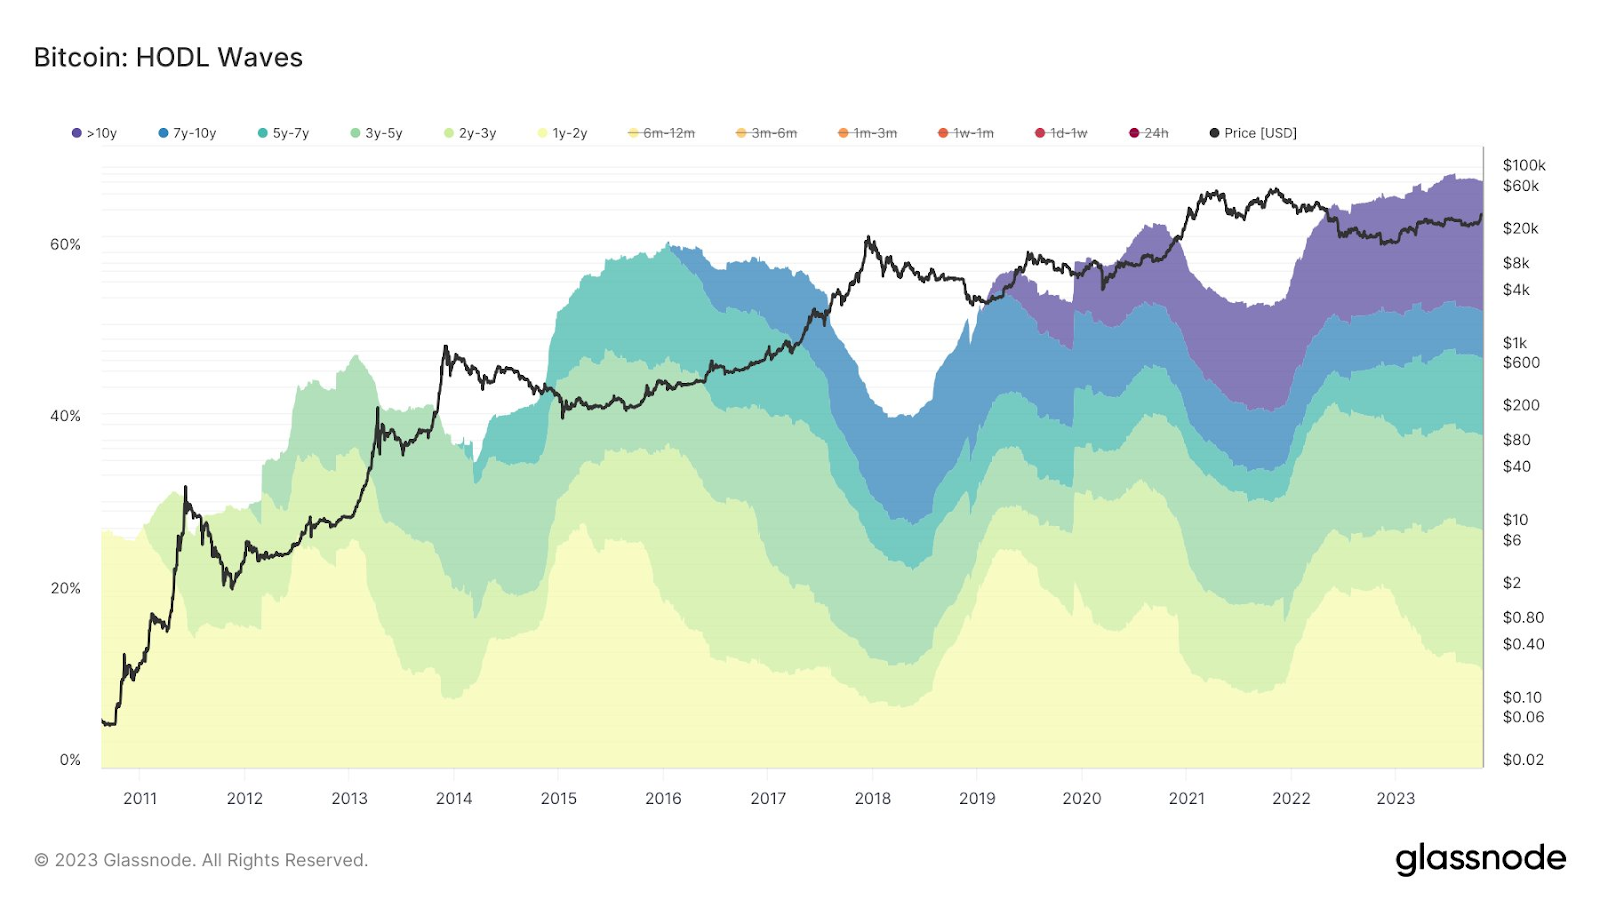 Glassnode chart showcasing Bitcoin HODL waves.